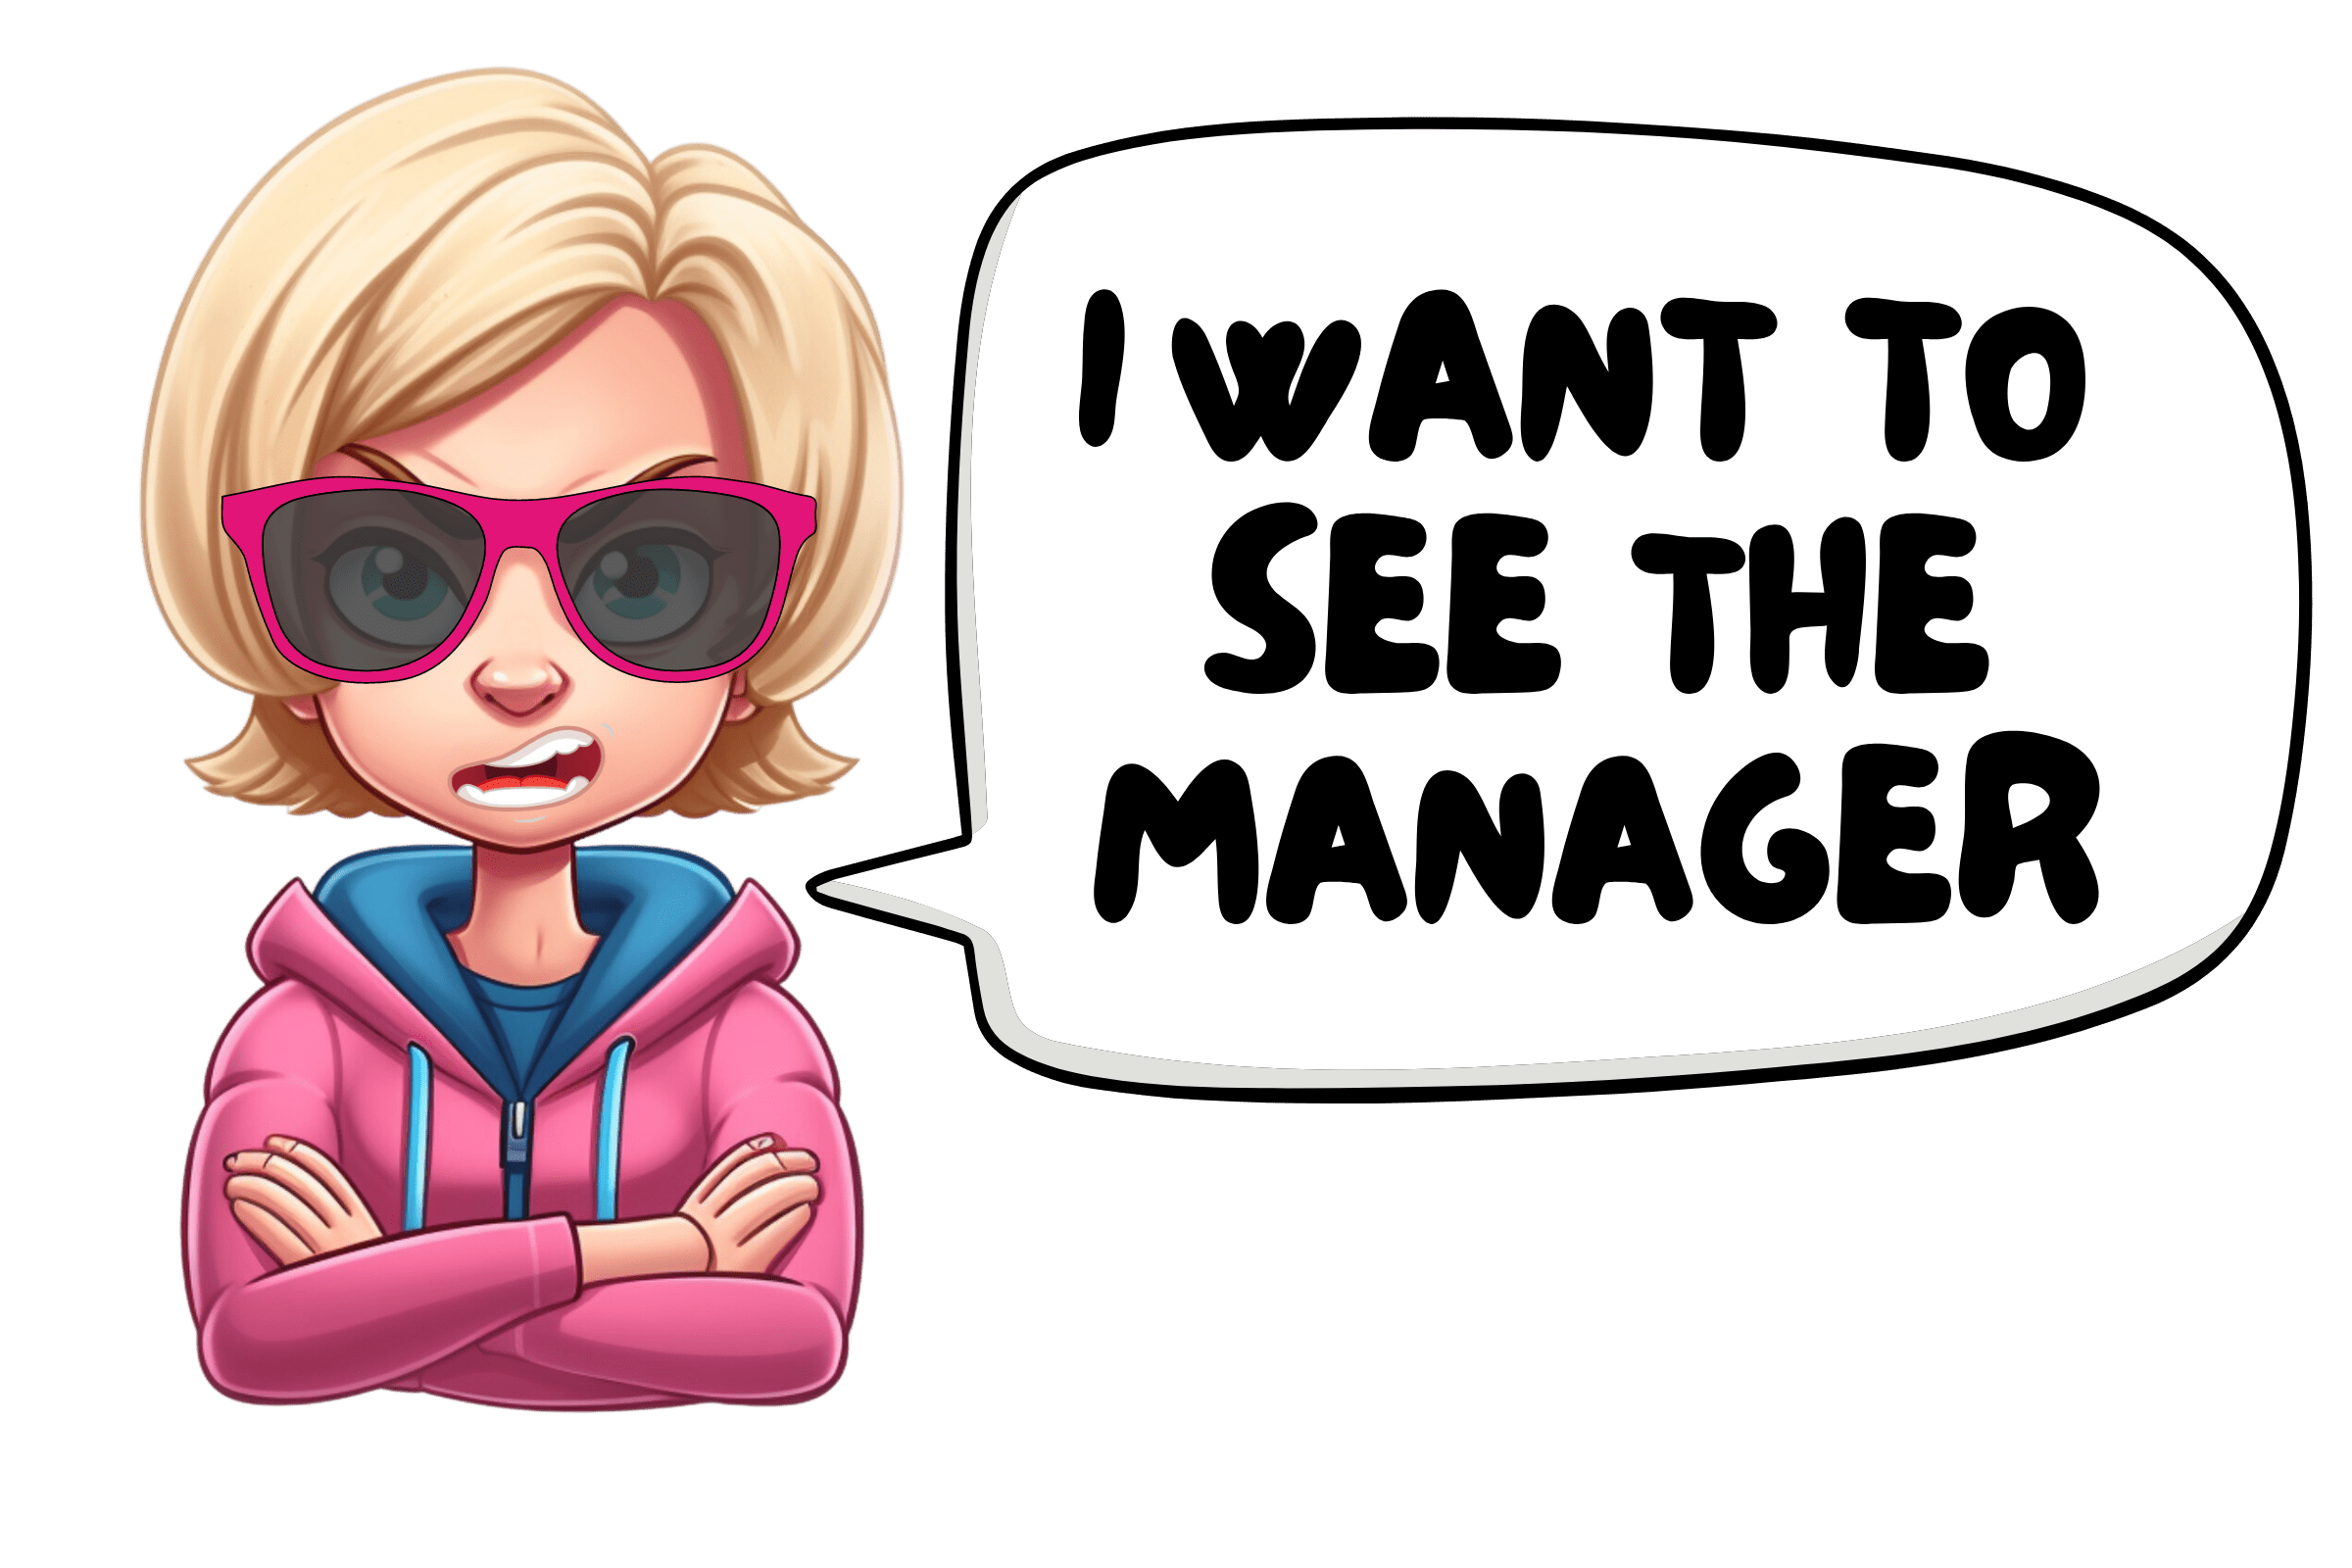 Shut Up Karen - Karen wants to see the manager